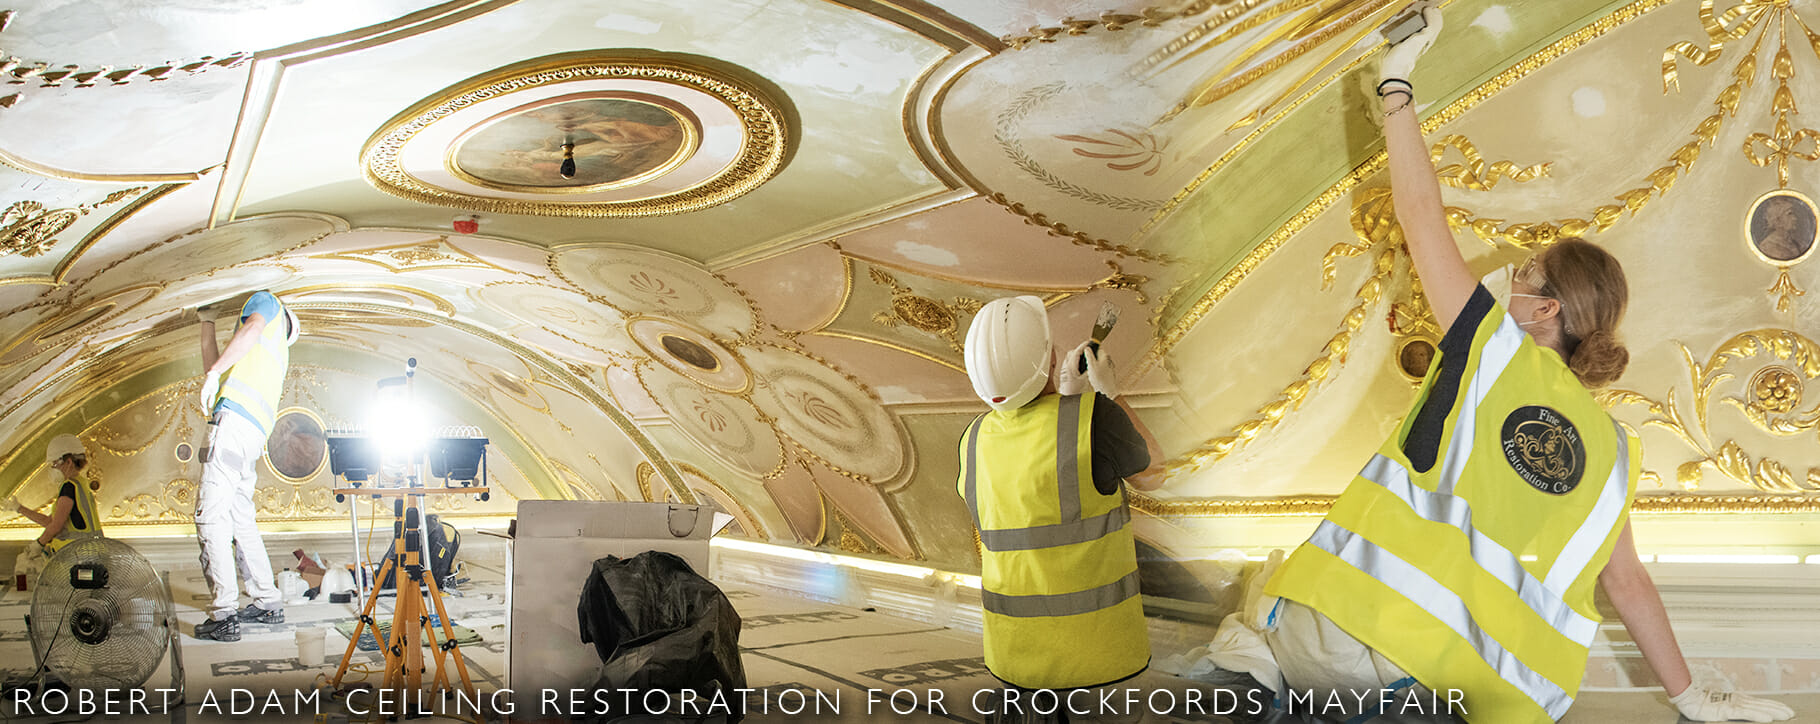 Crockfords ceiling